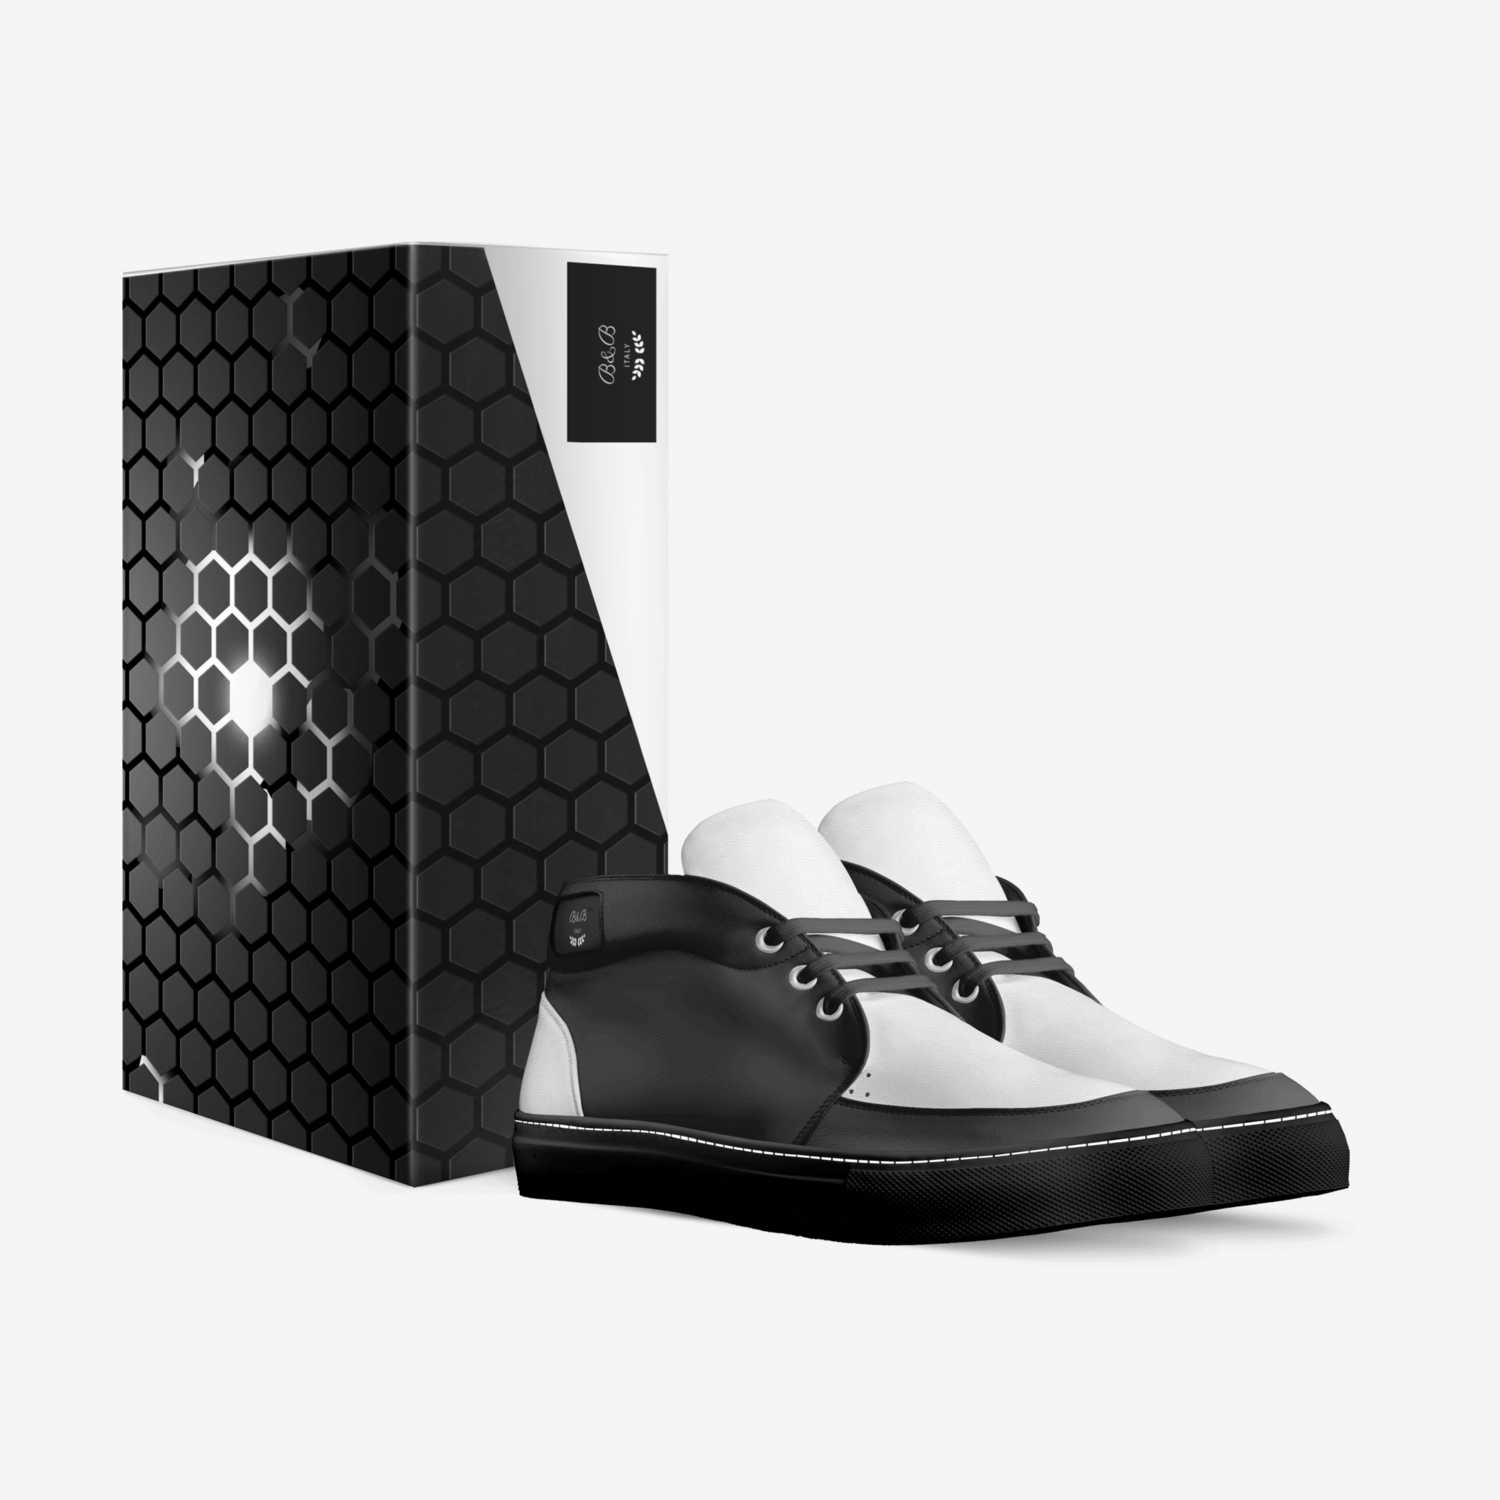 B&B custom made in Italy shoes by Fenesha Wilson | Box view